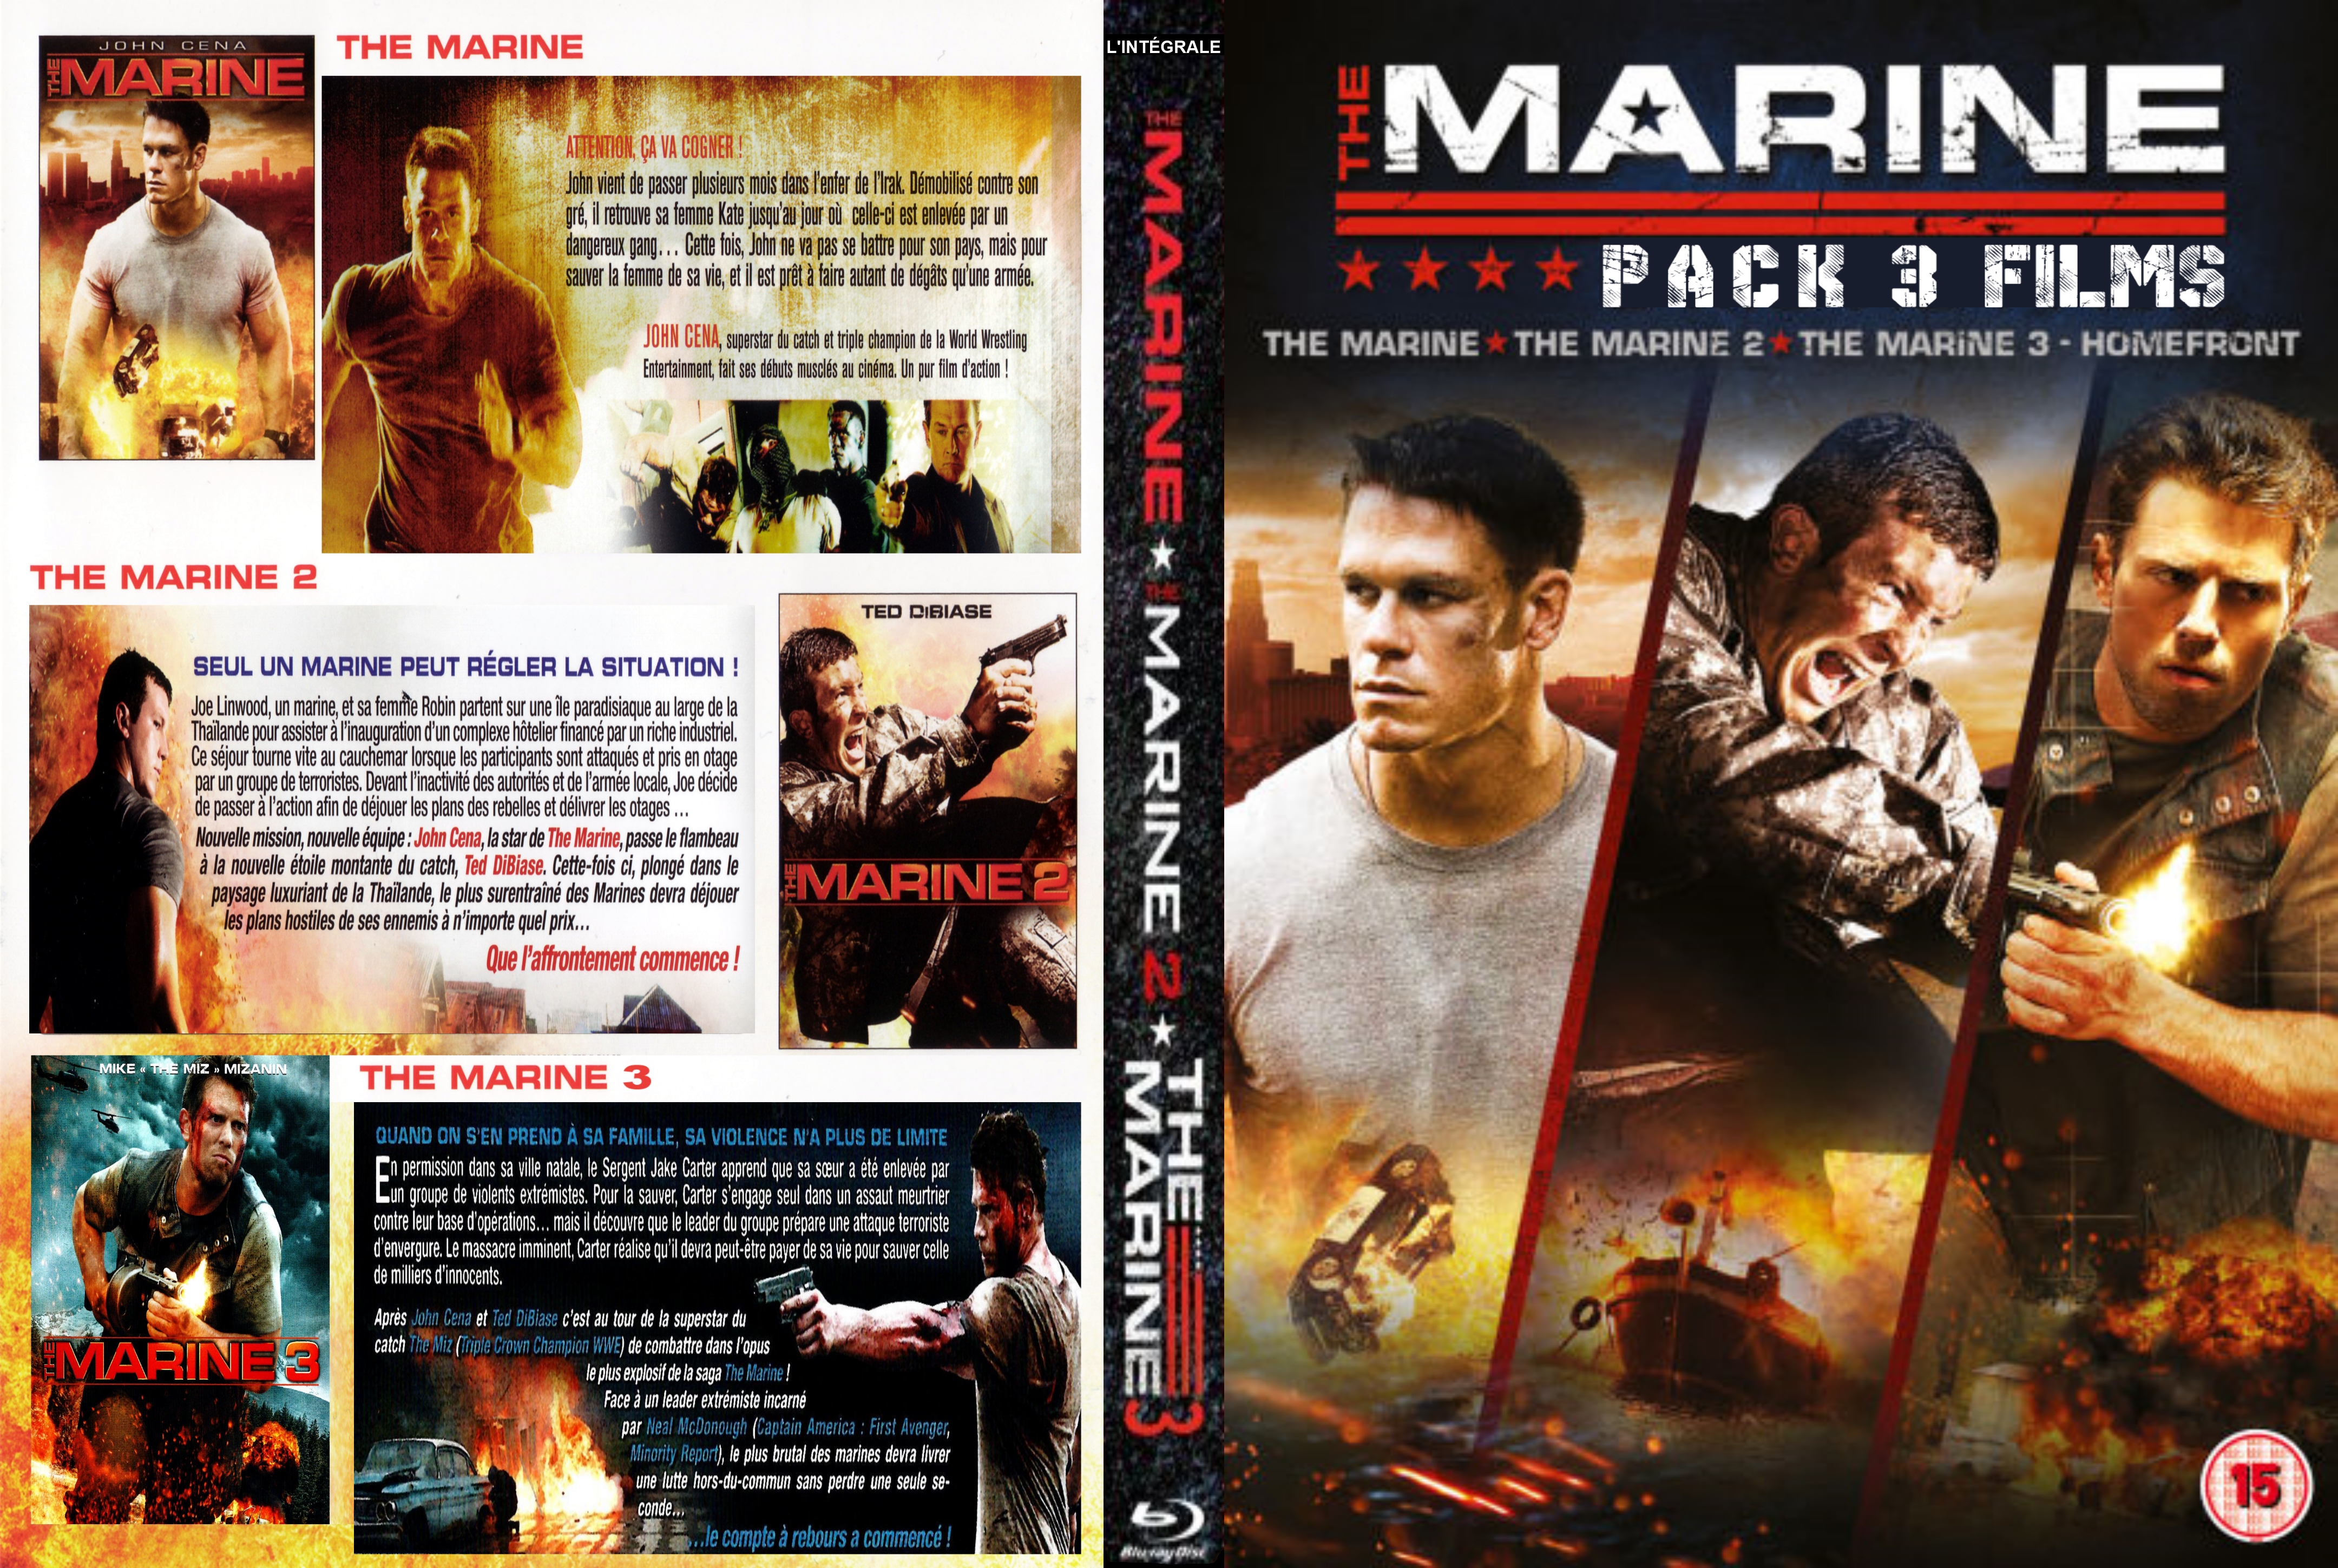 Jaquette DVD The marine pack 3 films custom